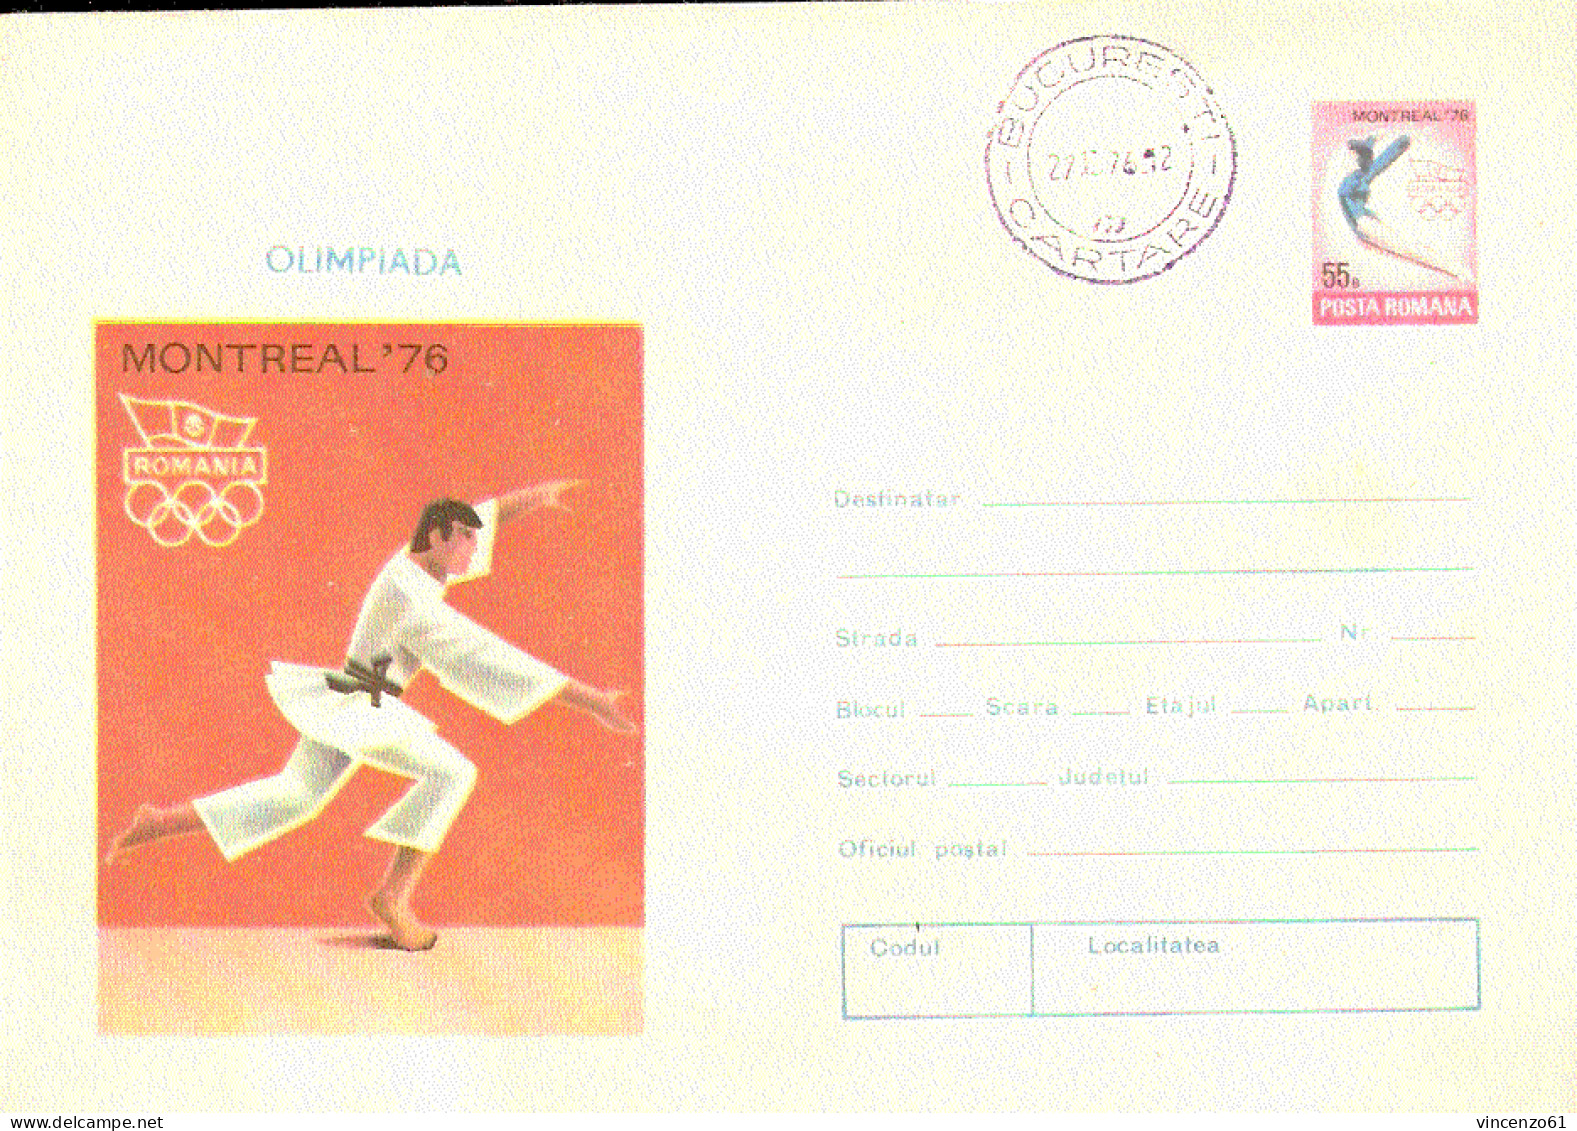 INTERO POSTALE POSTA ROMANA OLIMPIADE MONTREAL 1976 JUDO - Judo